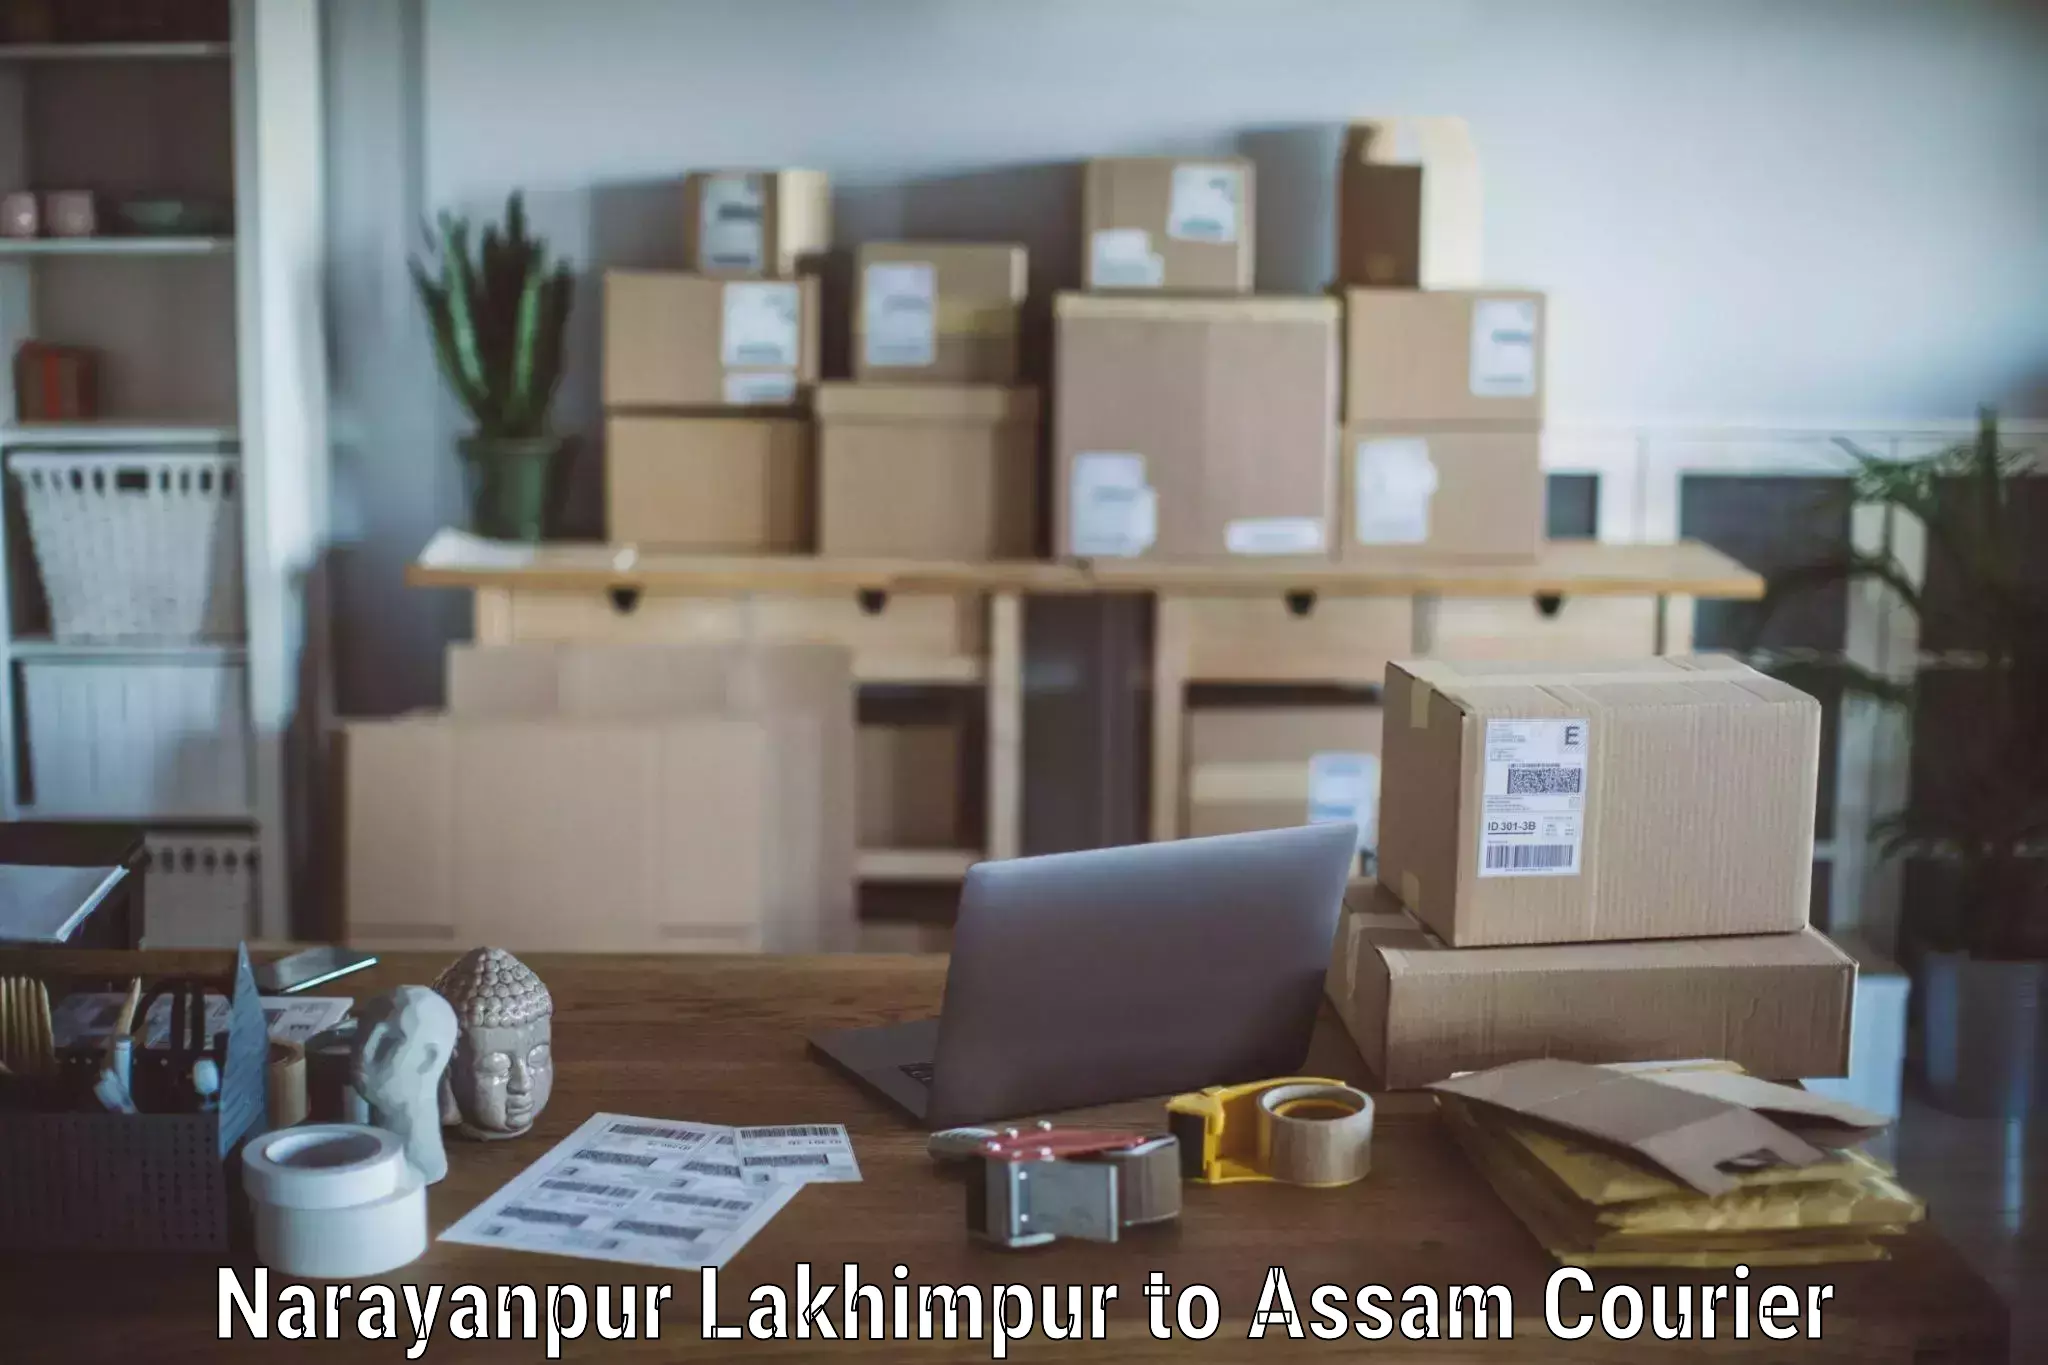 Professional movers Narayanpur Lakhimpur to Darranga Mela